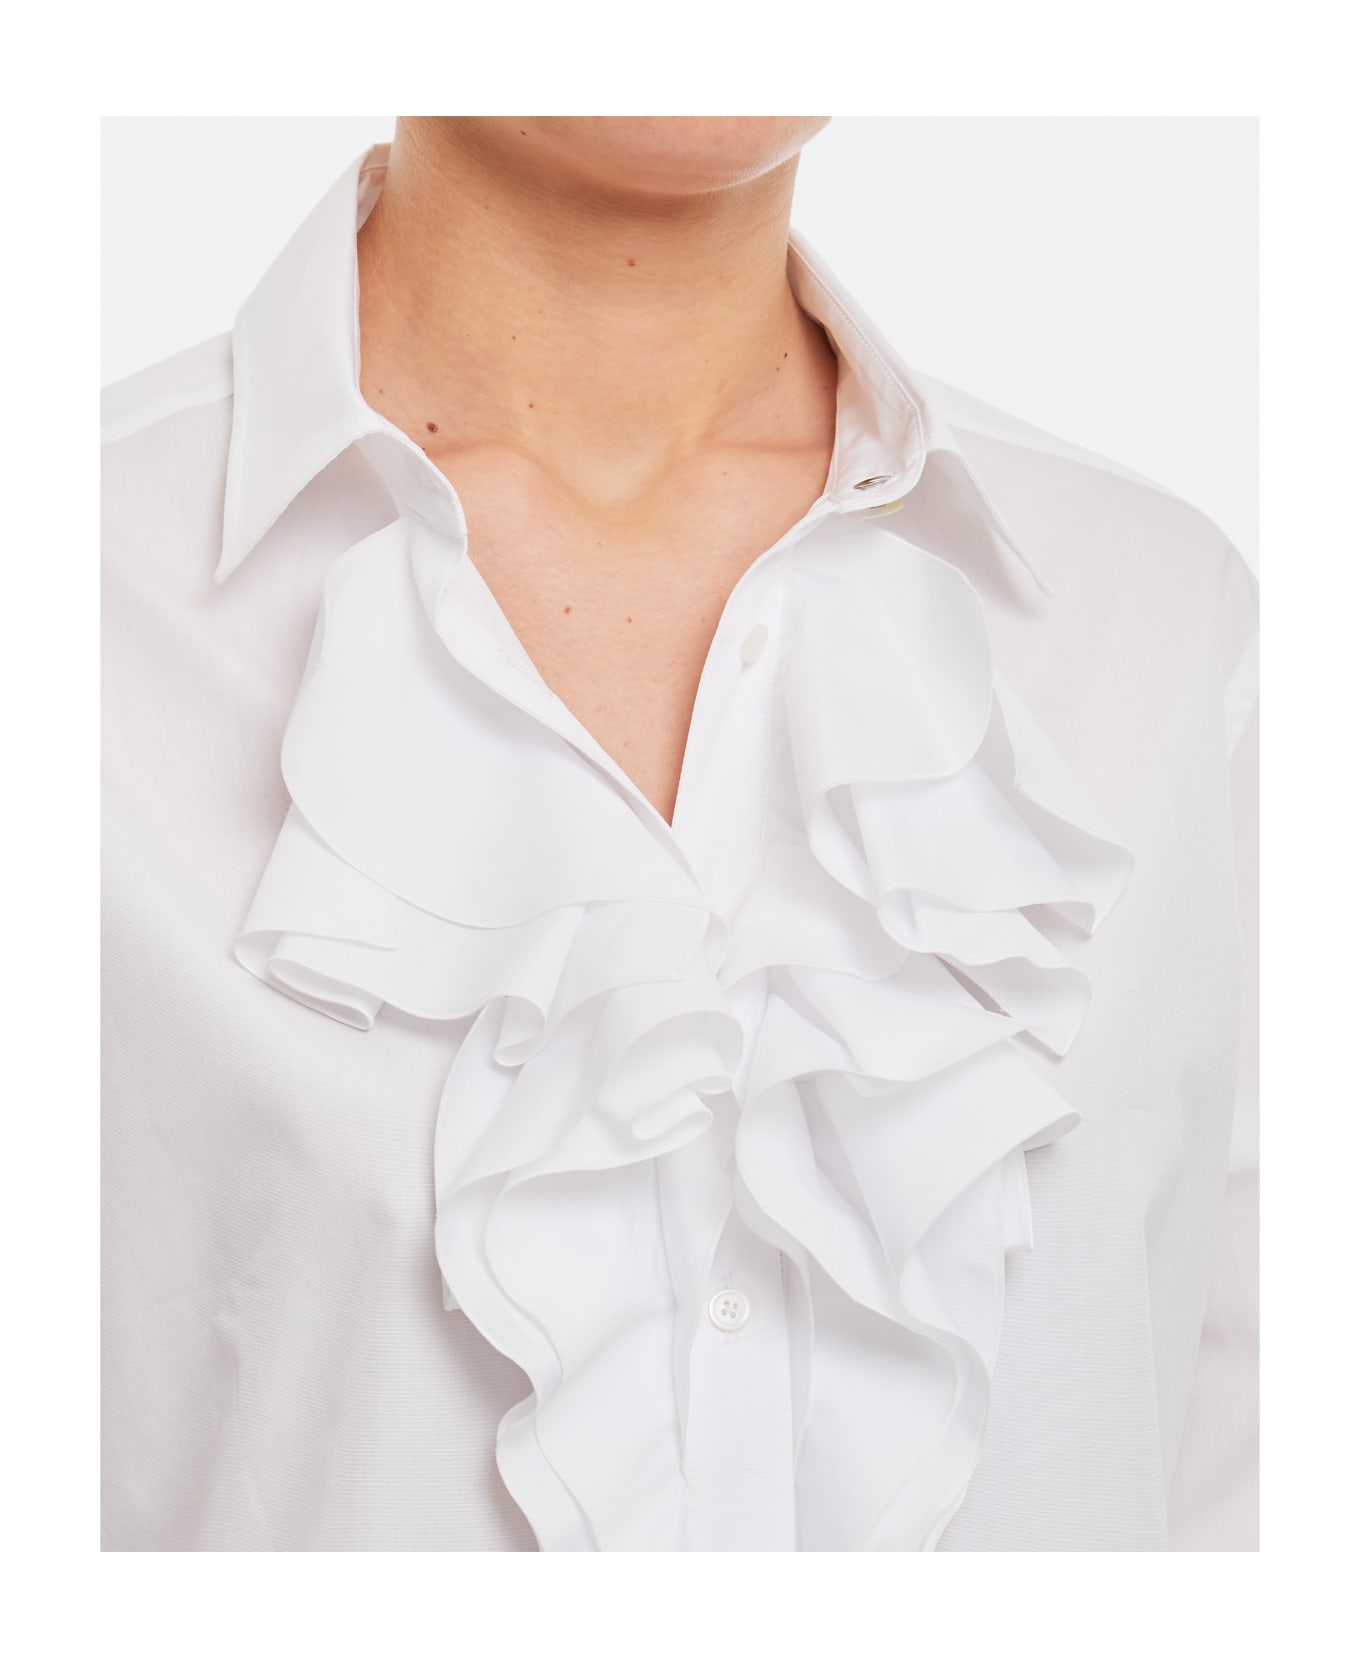 Ralph Lauren Keara Long Sleeves Cotton Shirt - White